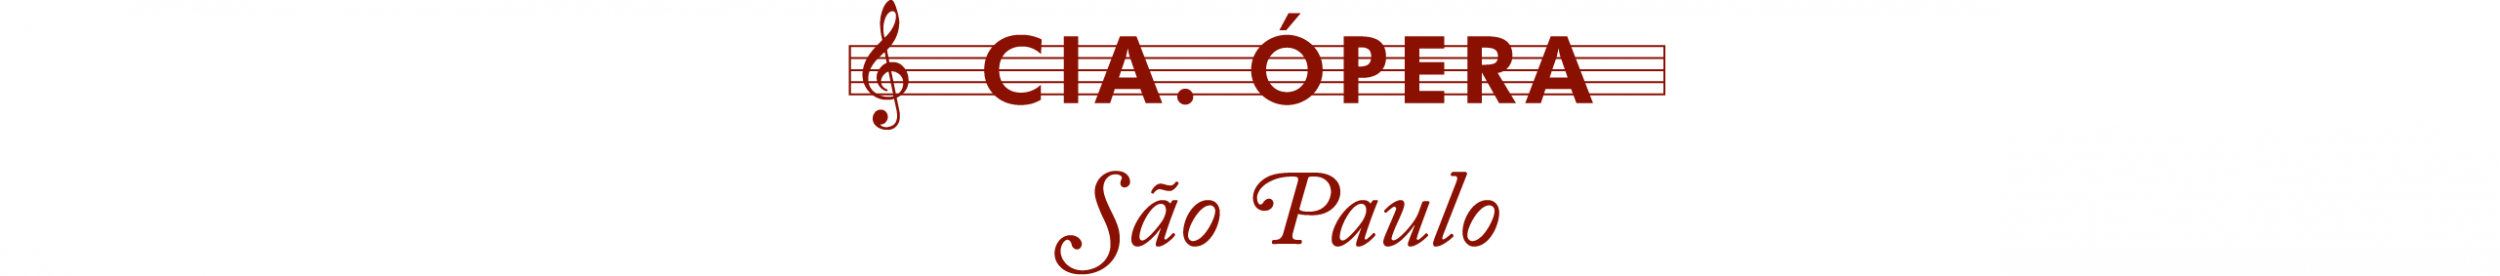 Cia Opera São Paulo